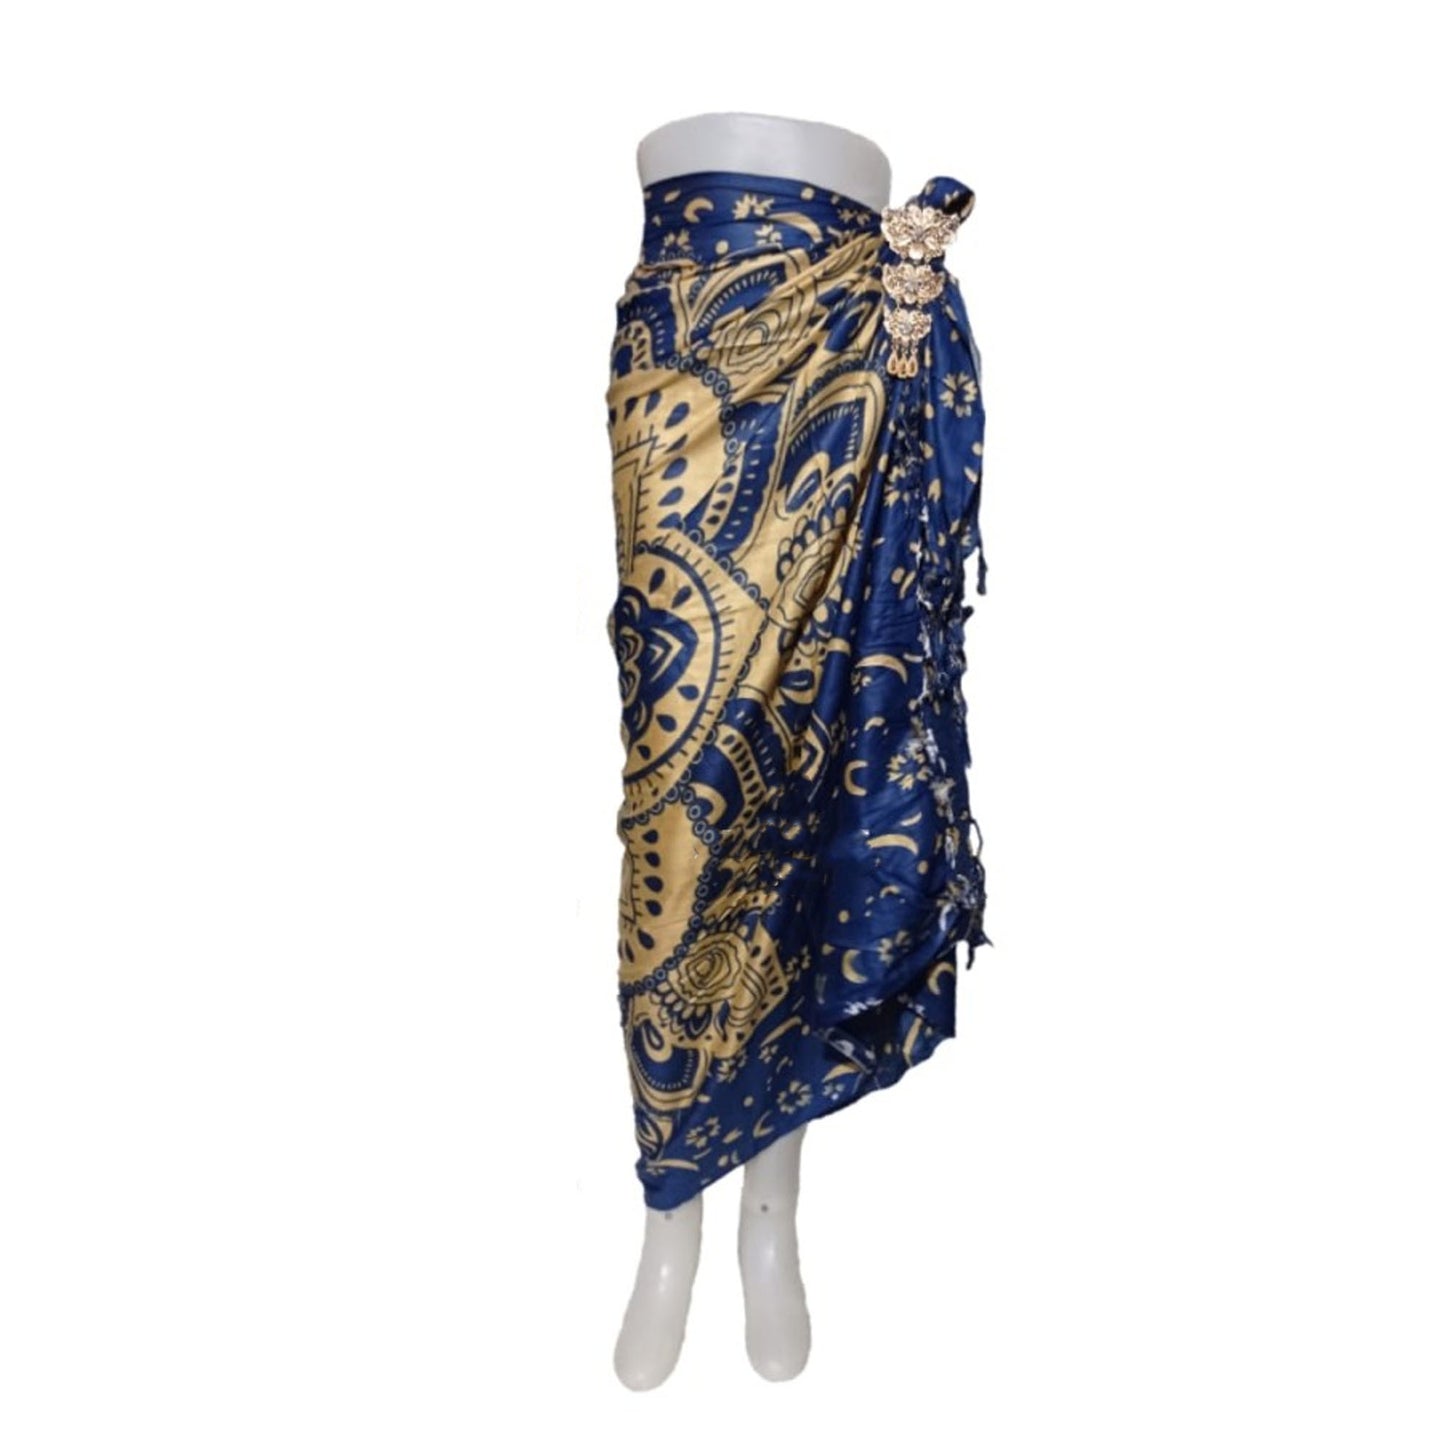 Beach Cloth / Balinese Cloth with Standard Luxury Motifs, Sarong, Beach Cover-Up, Balinese Beach Wrap, Beach Sarong, Pareo